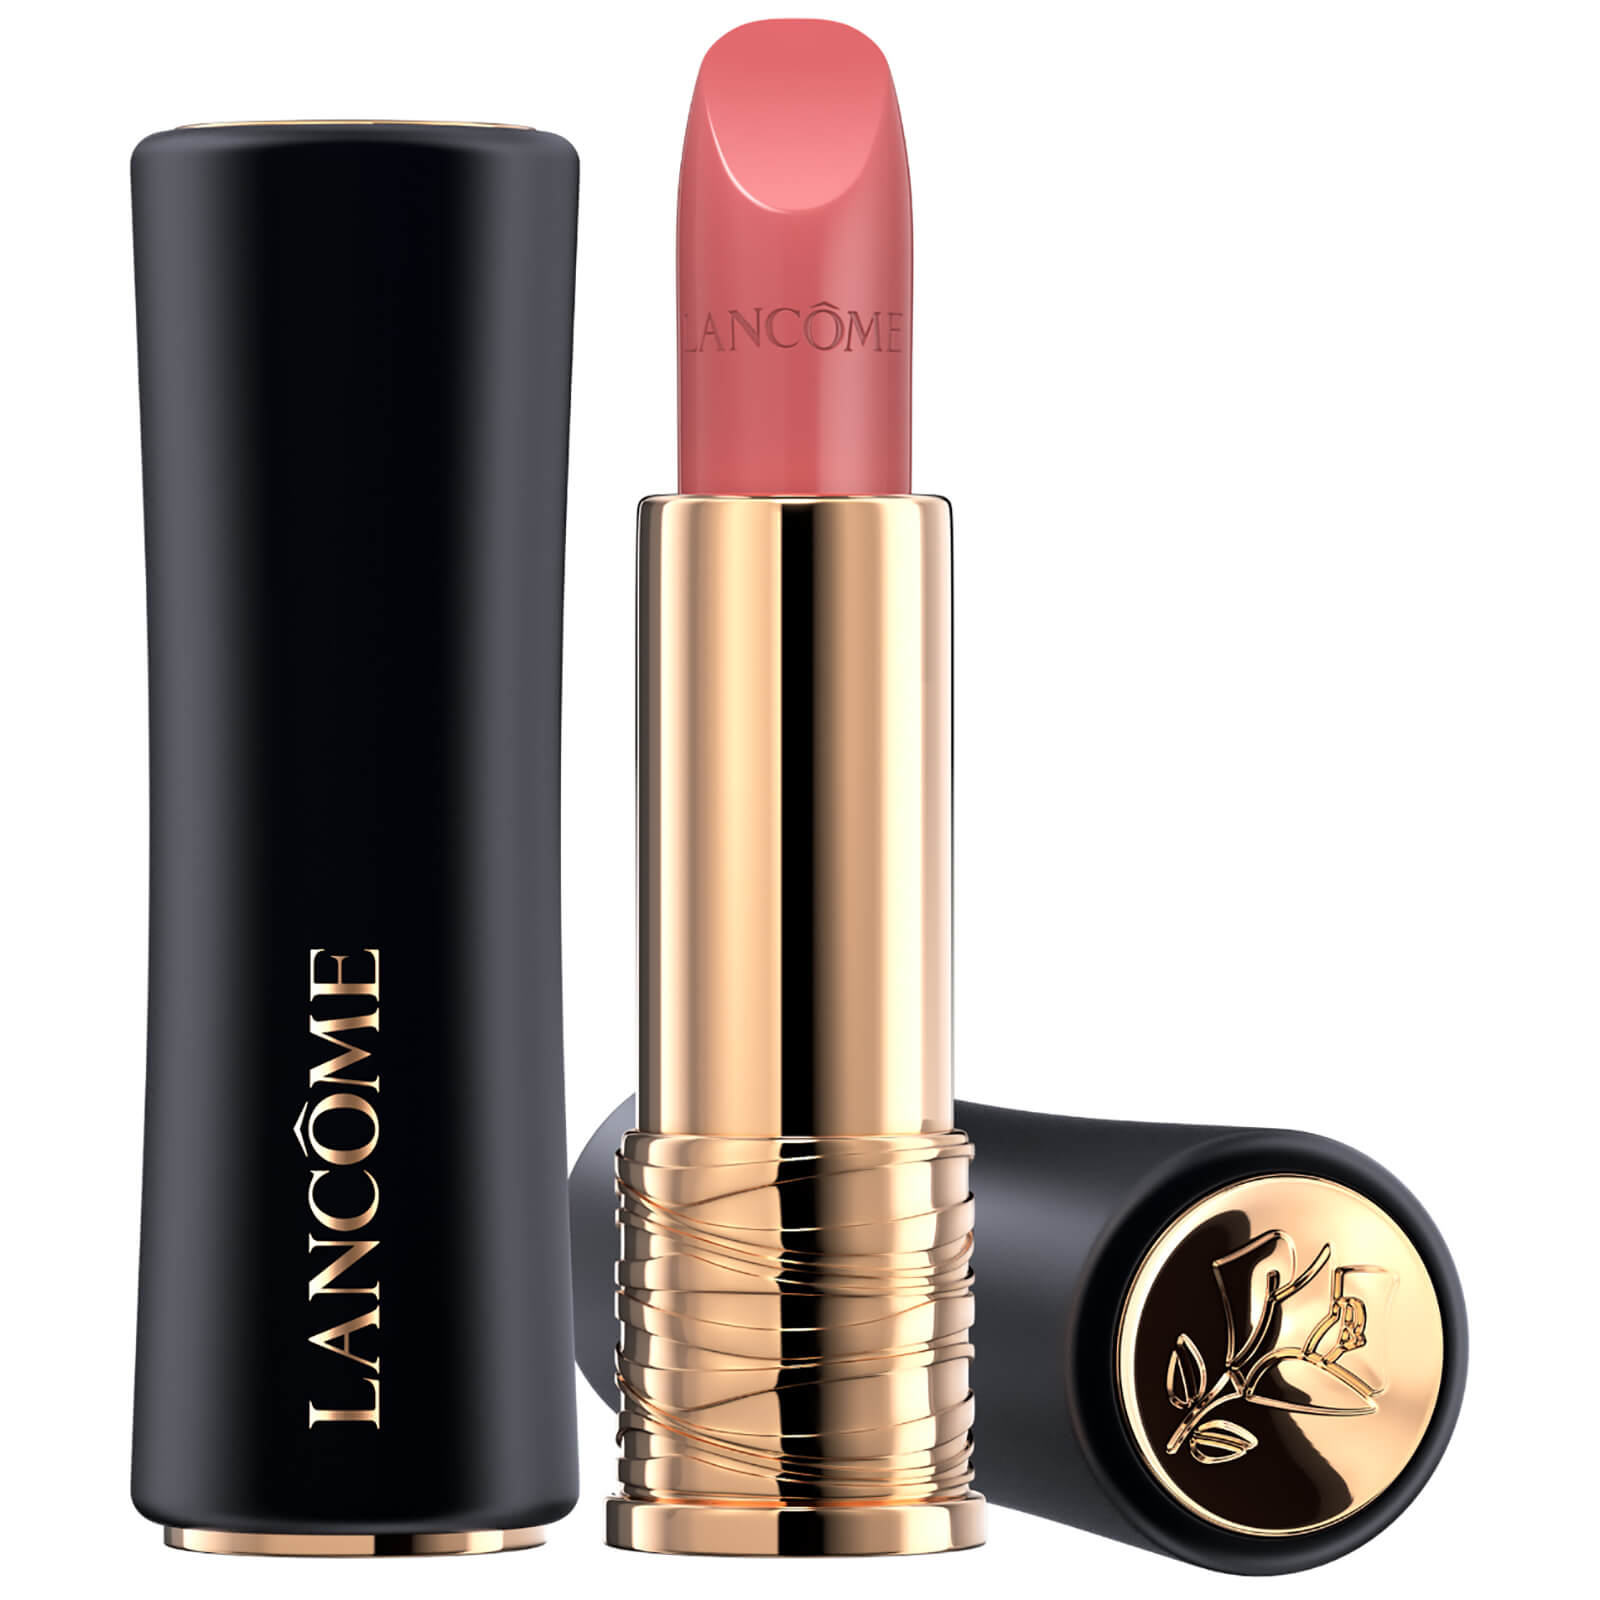 Lancome L'Absolu Rouge Cream Lipstick 35ml (Various Shades) - 276 Timeless Romance